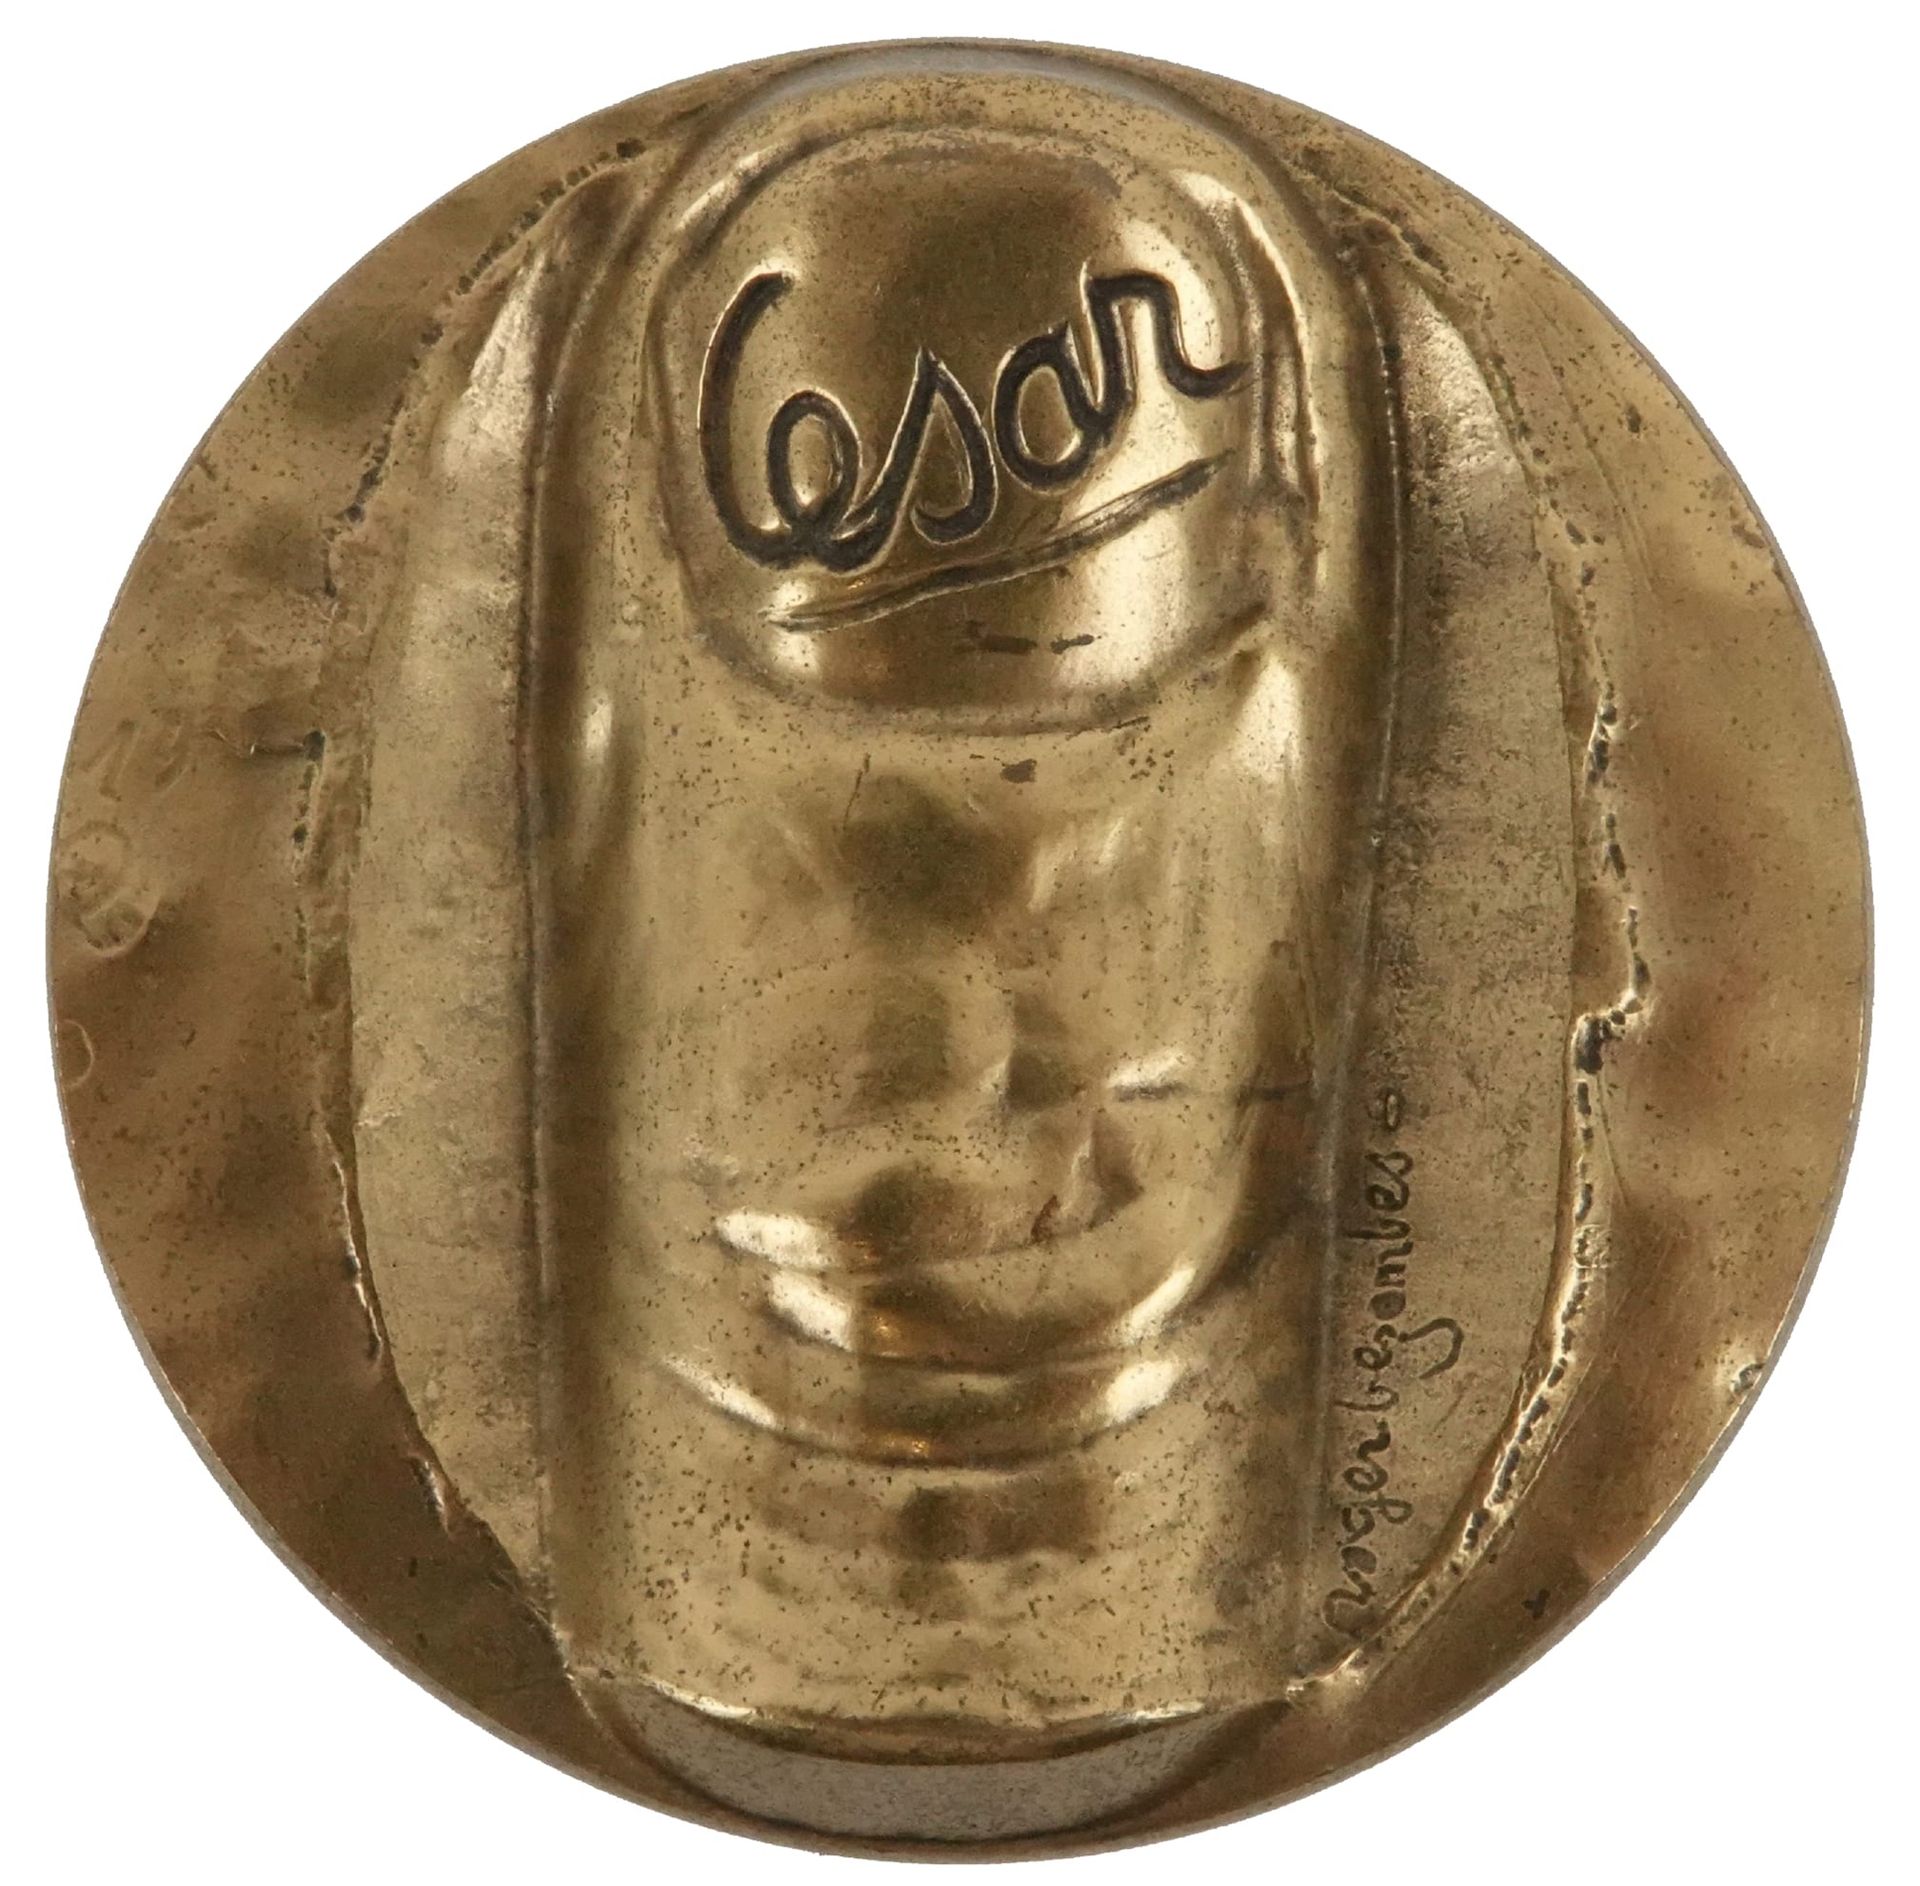 Roger BEZOMBES (1913-1994) Homage to Caesar, circa 1971
Large bronze medal, doub&hellip;